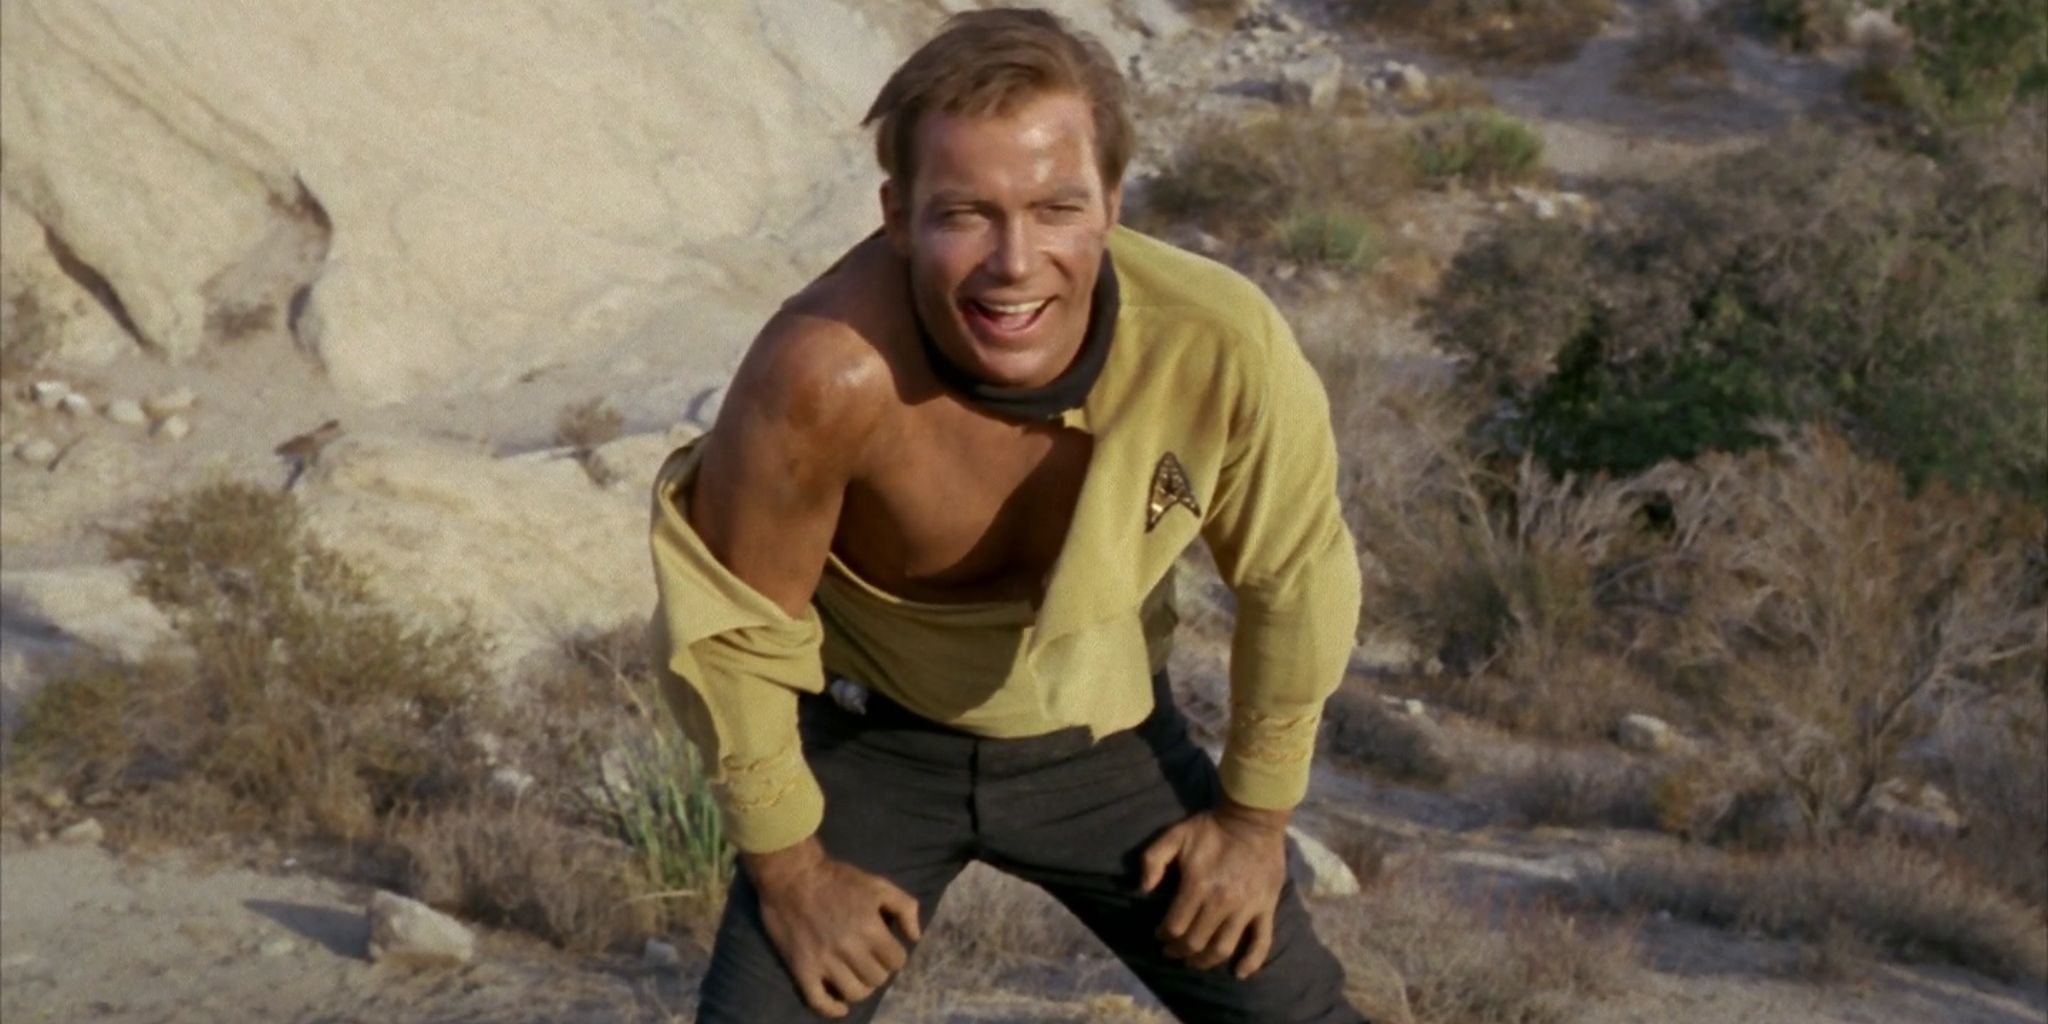 Kirk's ripped shirt